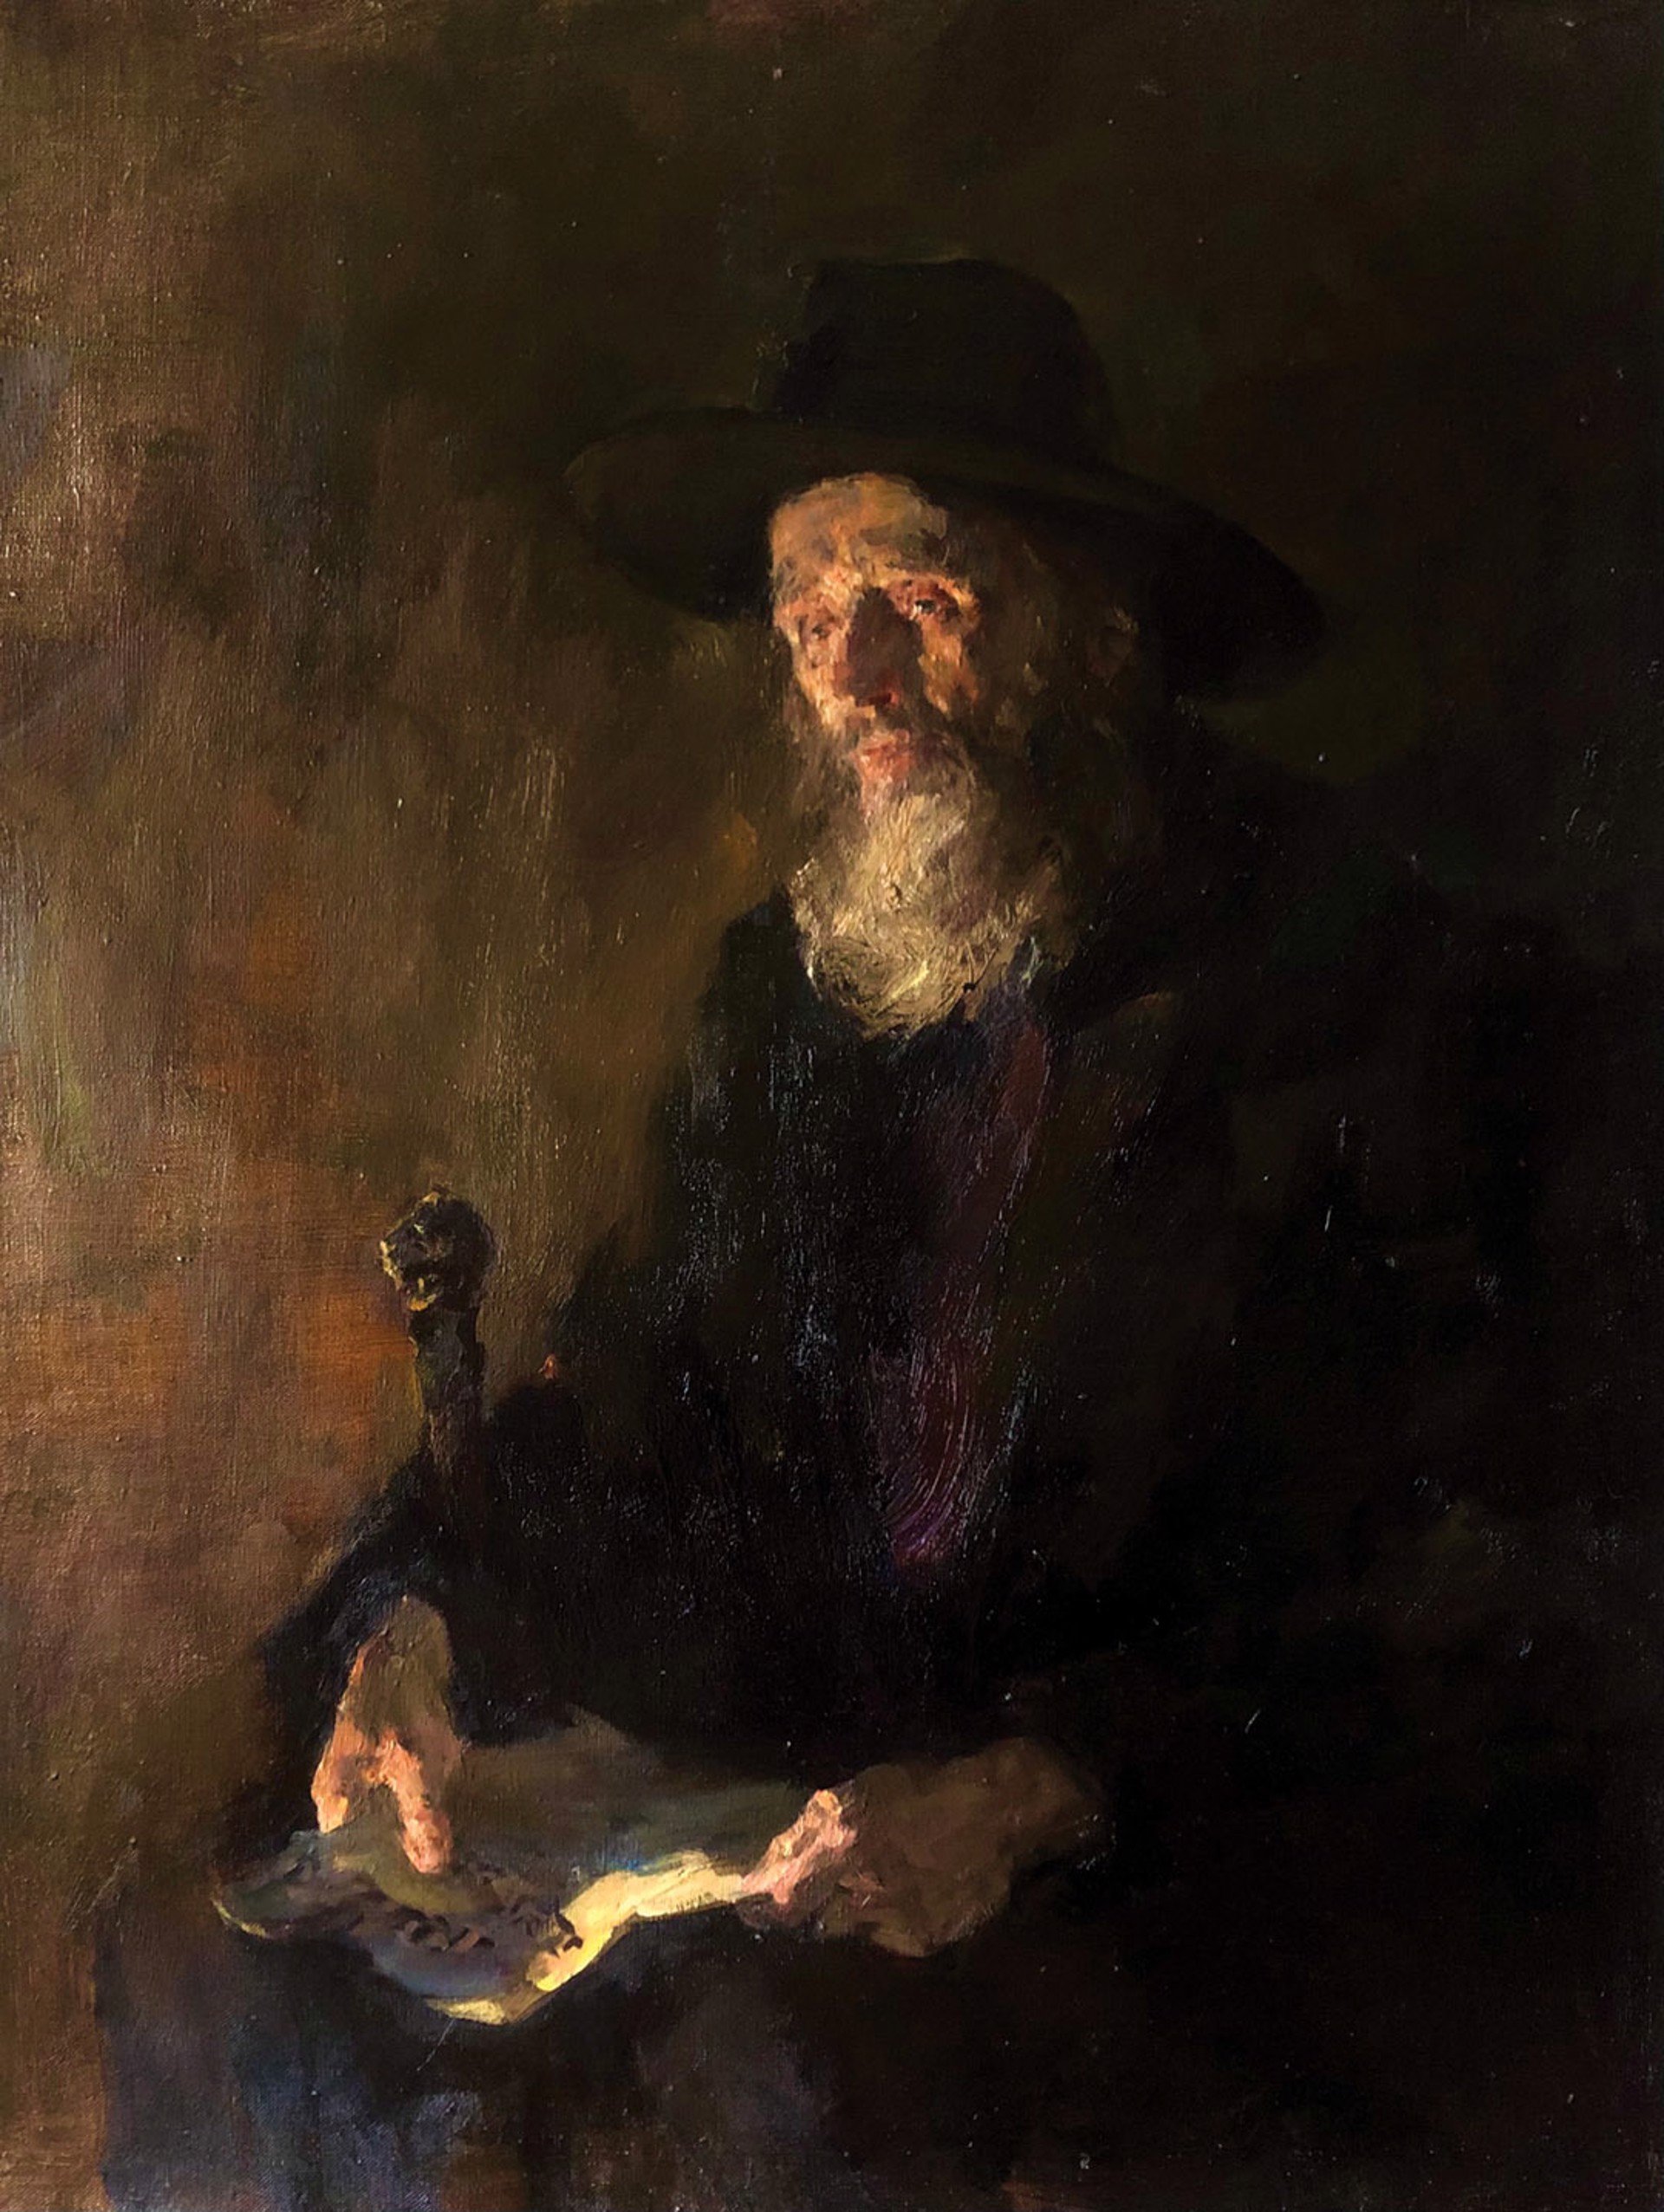 Old Man with a Cane by Svetlana Verbovskaya